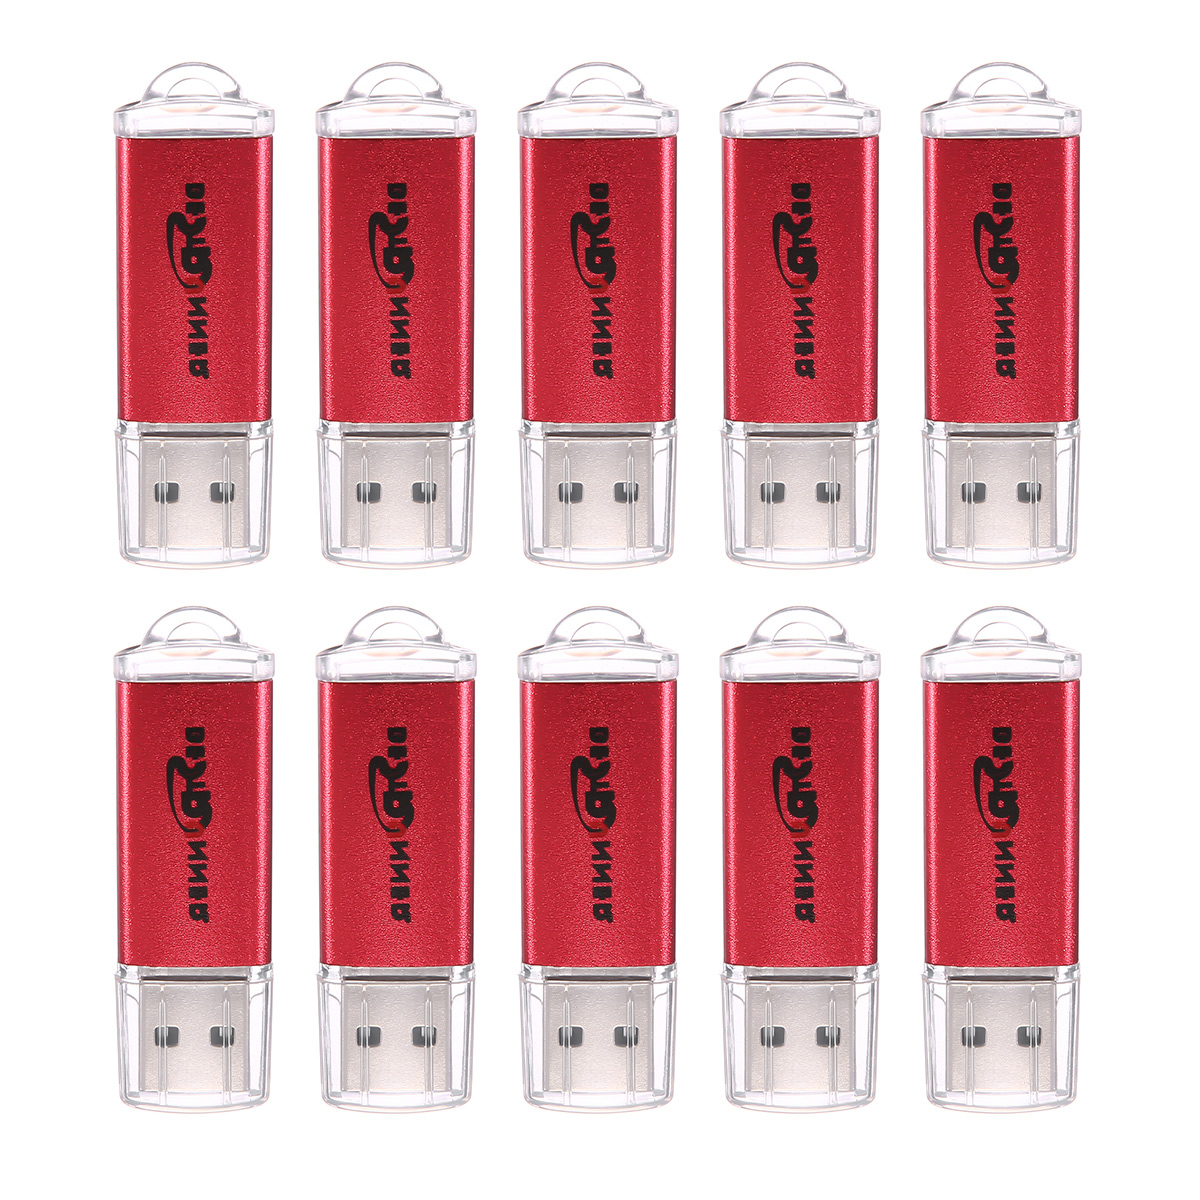 Bestrunner-10Pcs-128MB-USB-20-Flash-Drive-Candy-Red-Color-Memory-Pen-Storage-Thumb-U-Disk-1939063-1